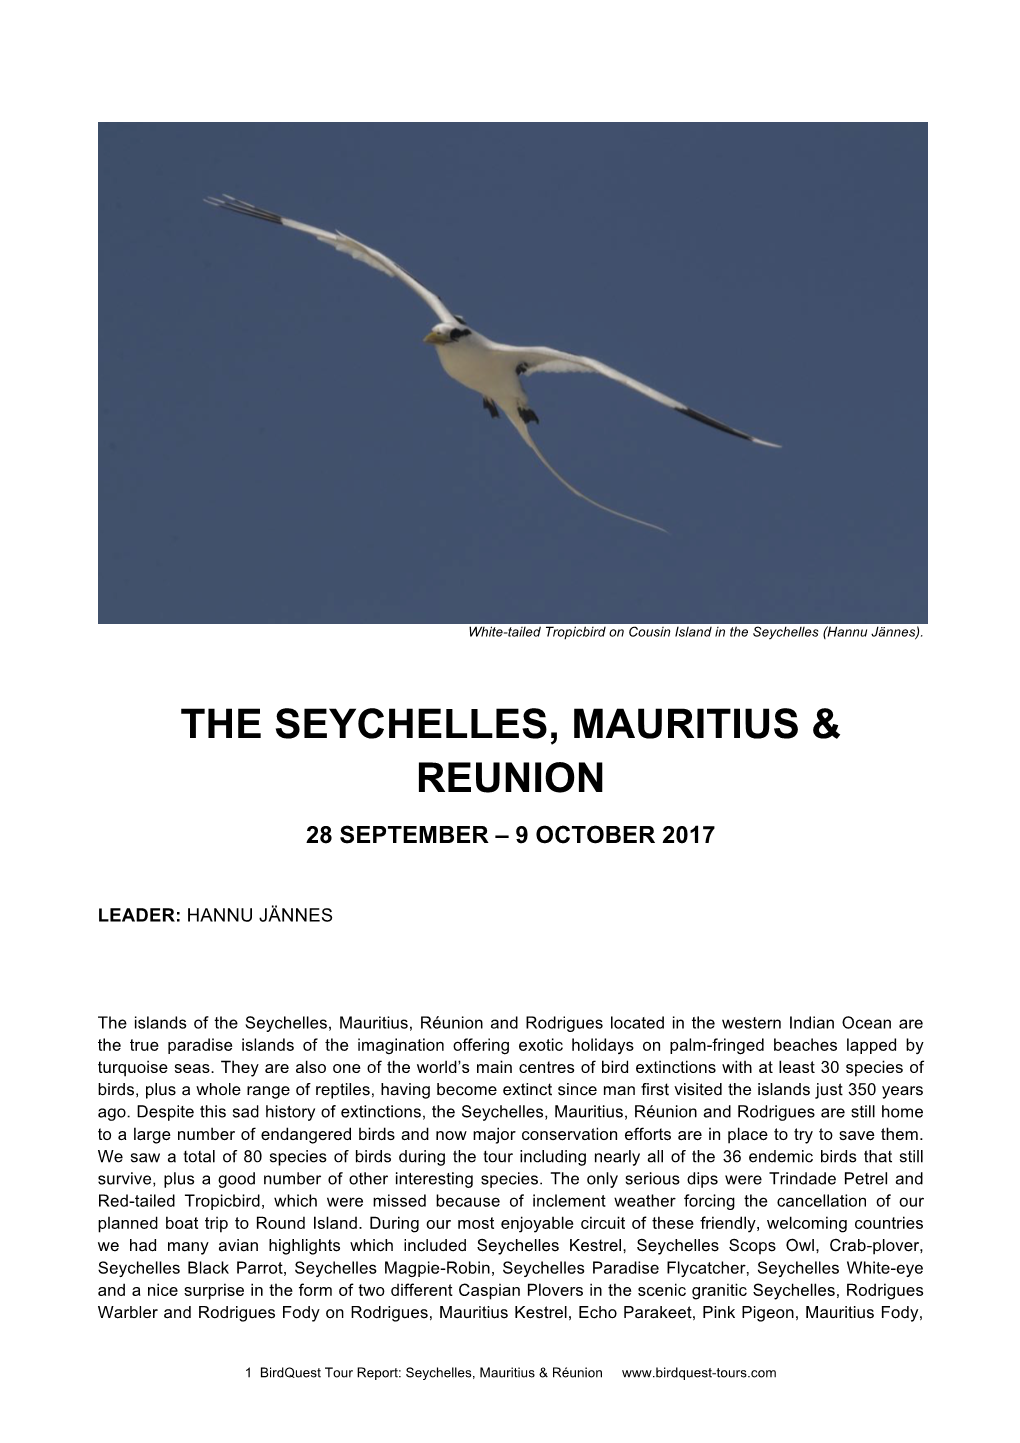 The Seychelles, Mauritius & Reunion